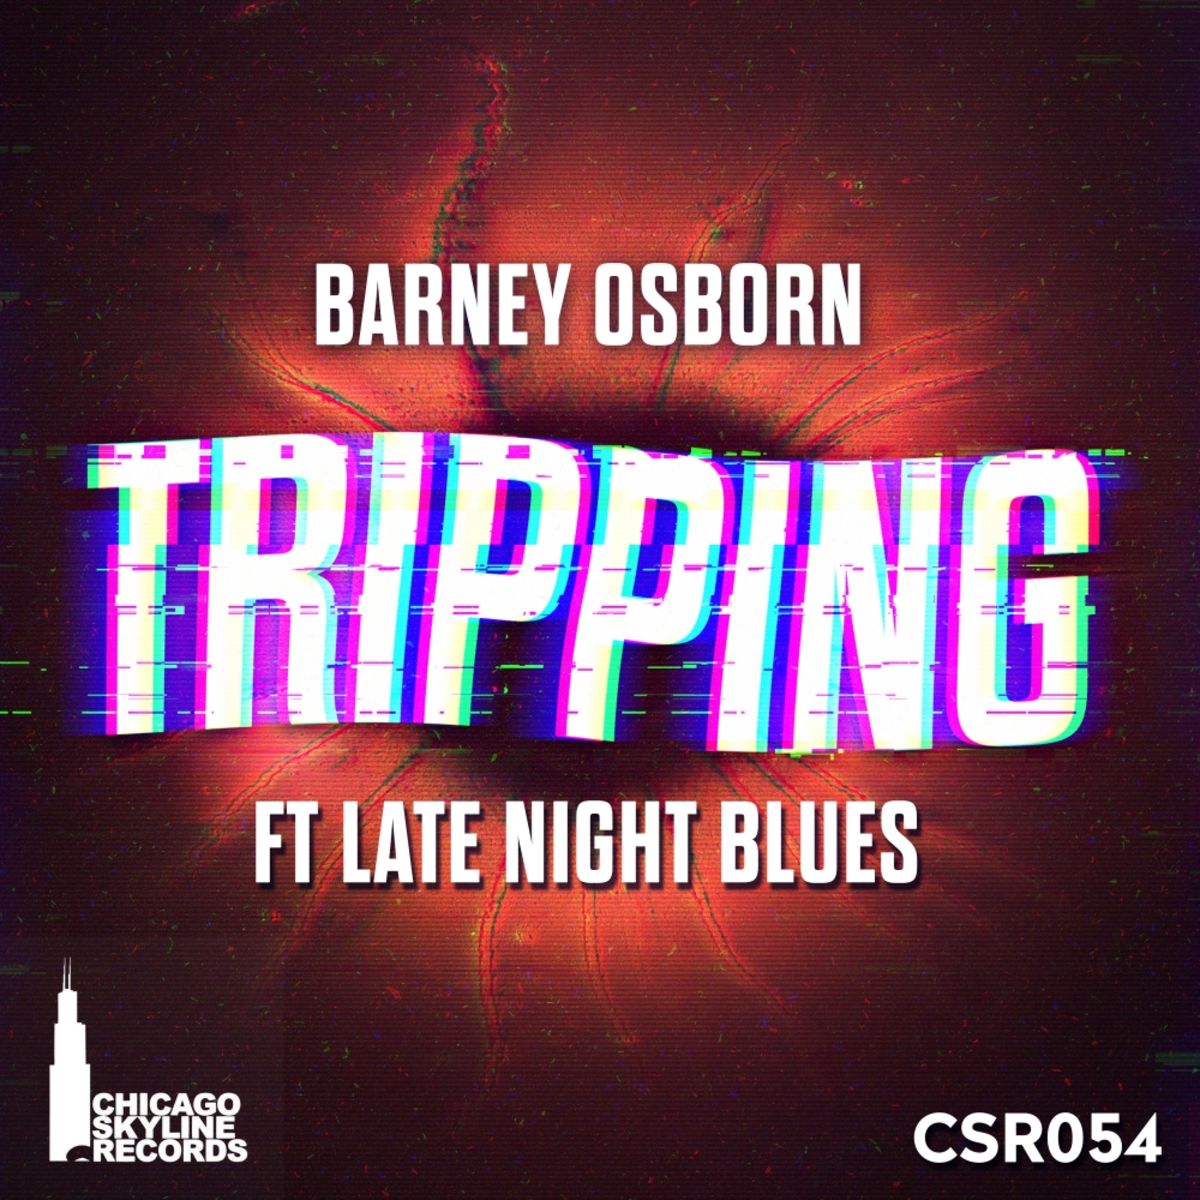 Barney Osborn - Tripping / Chicago Skyline Records